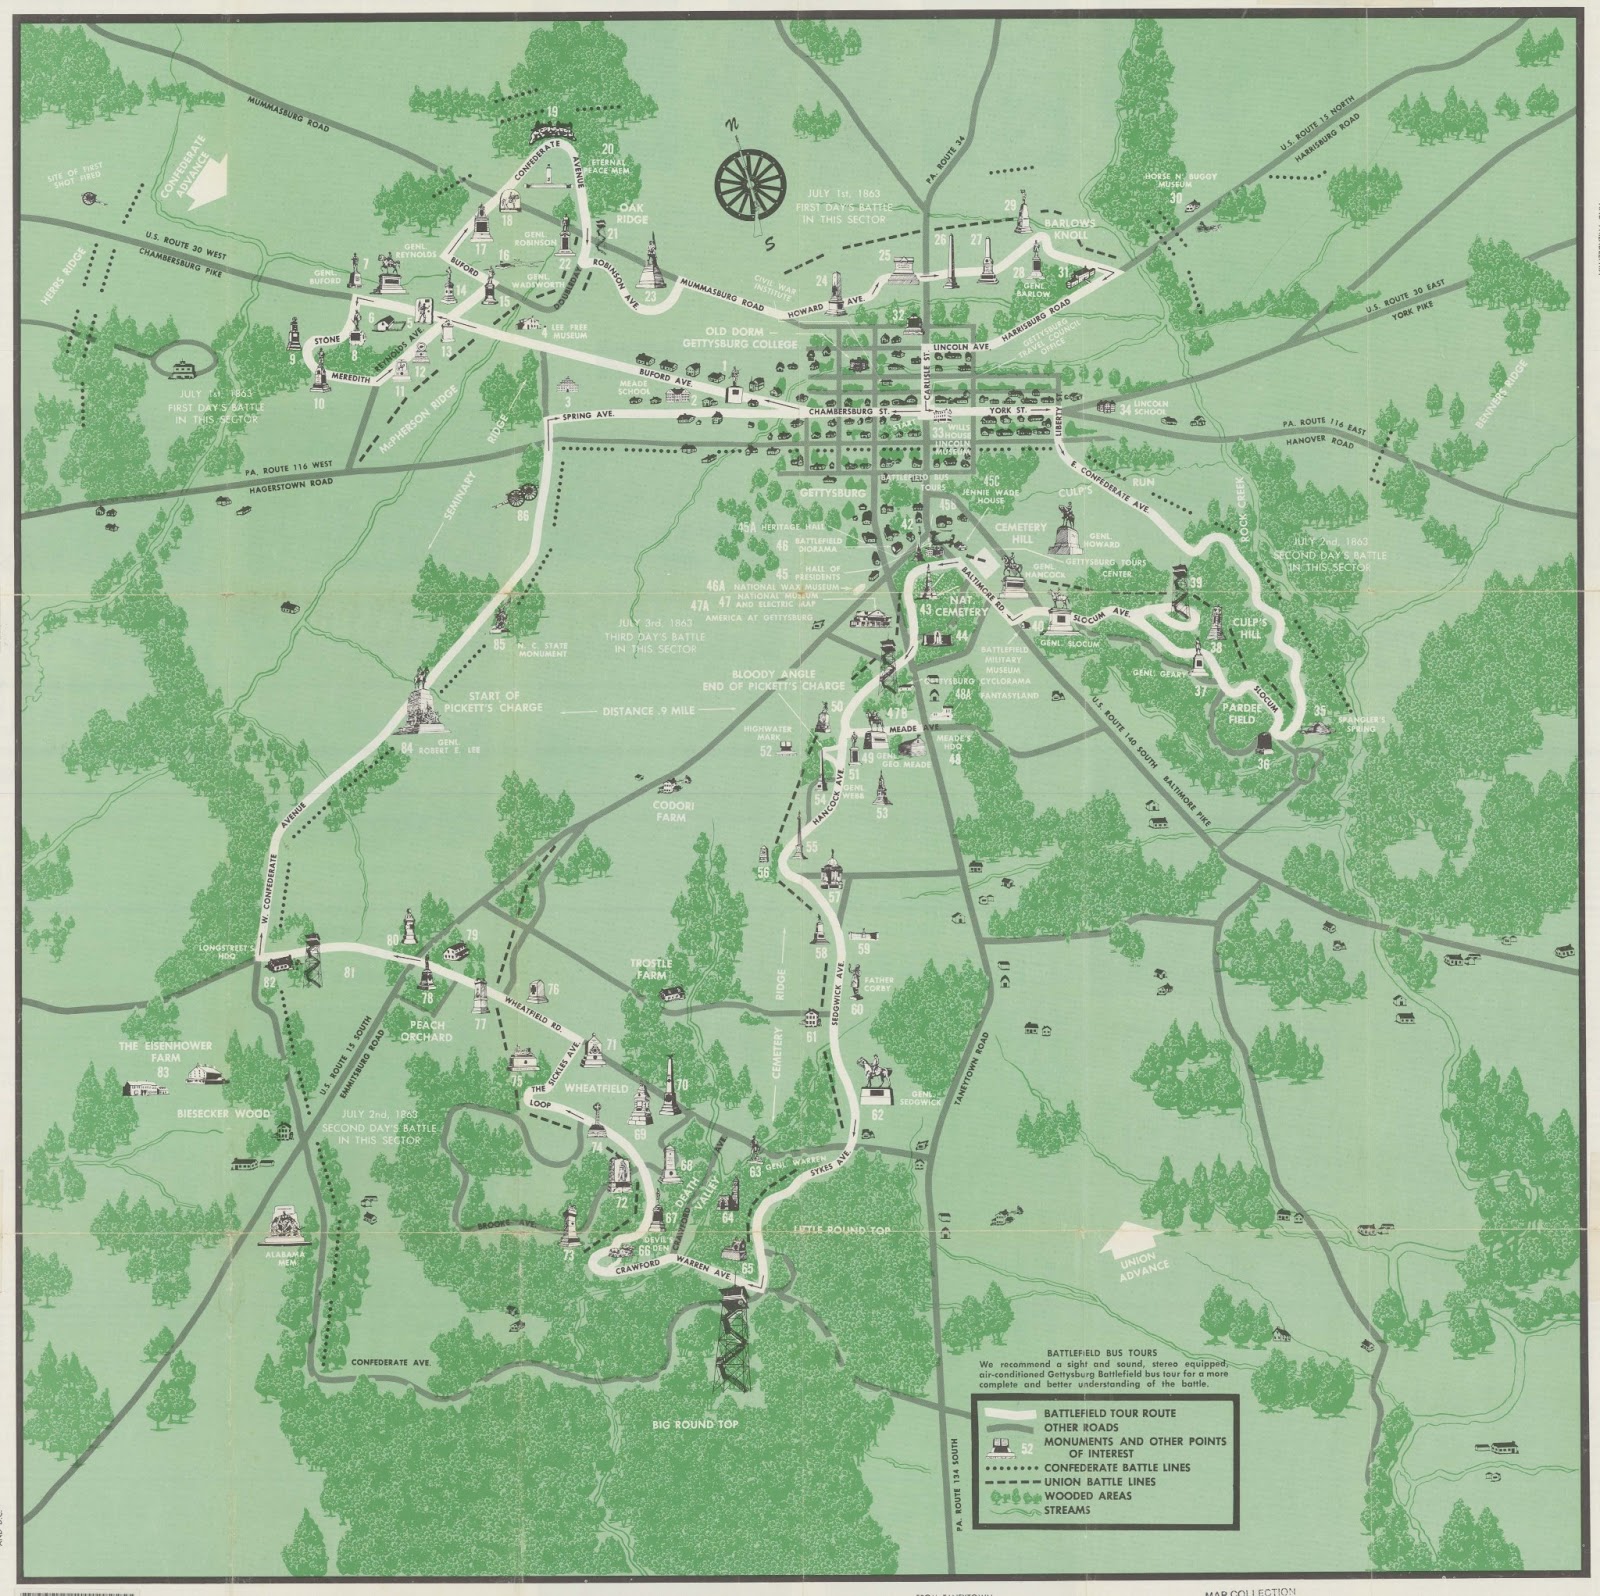 Gettysburg Map